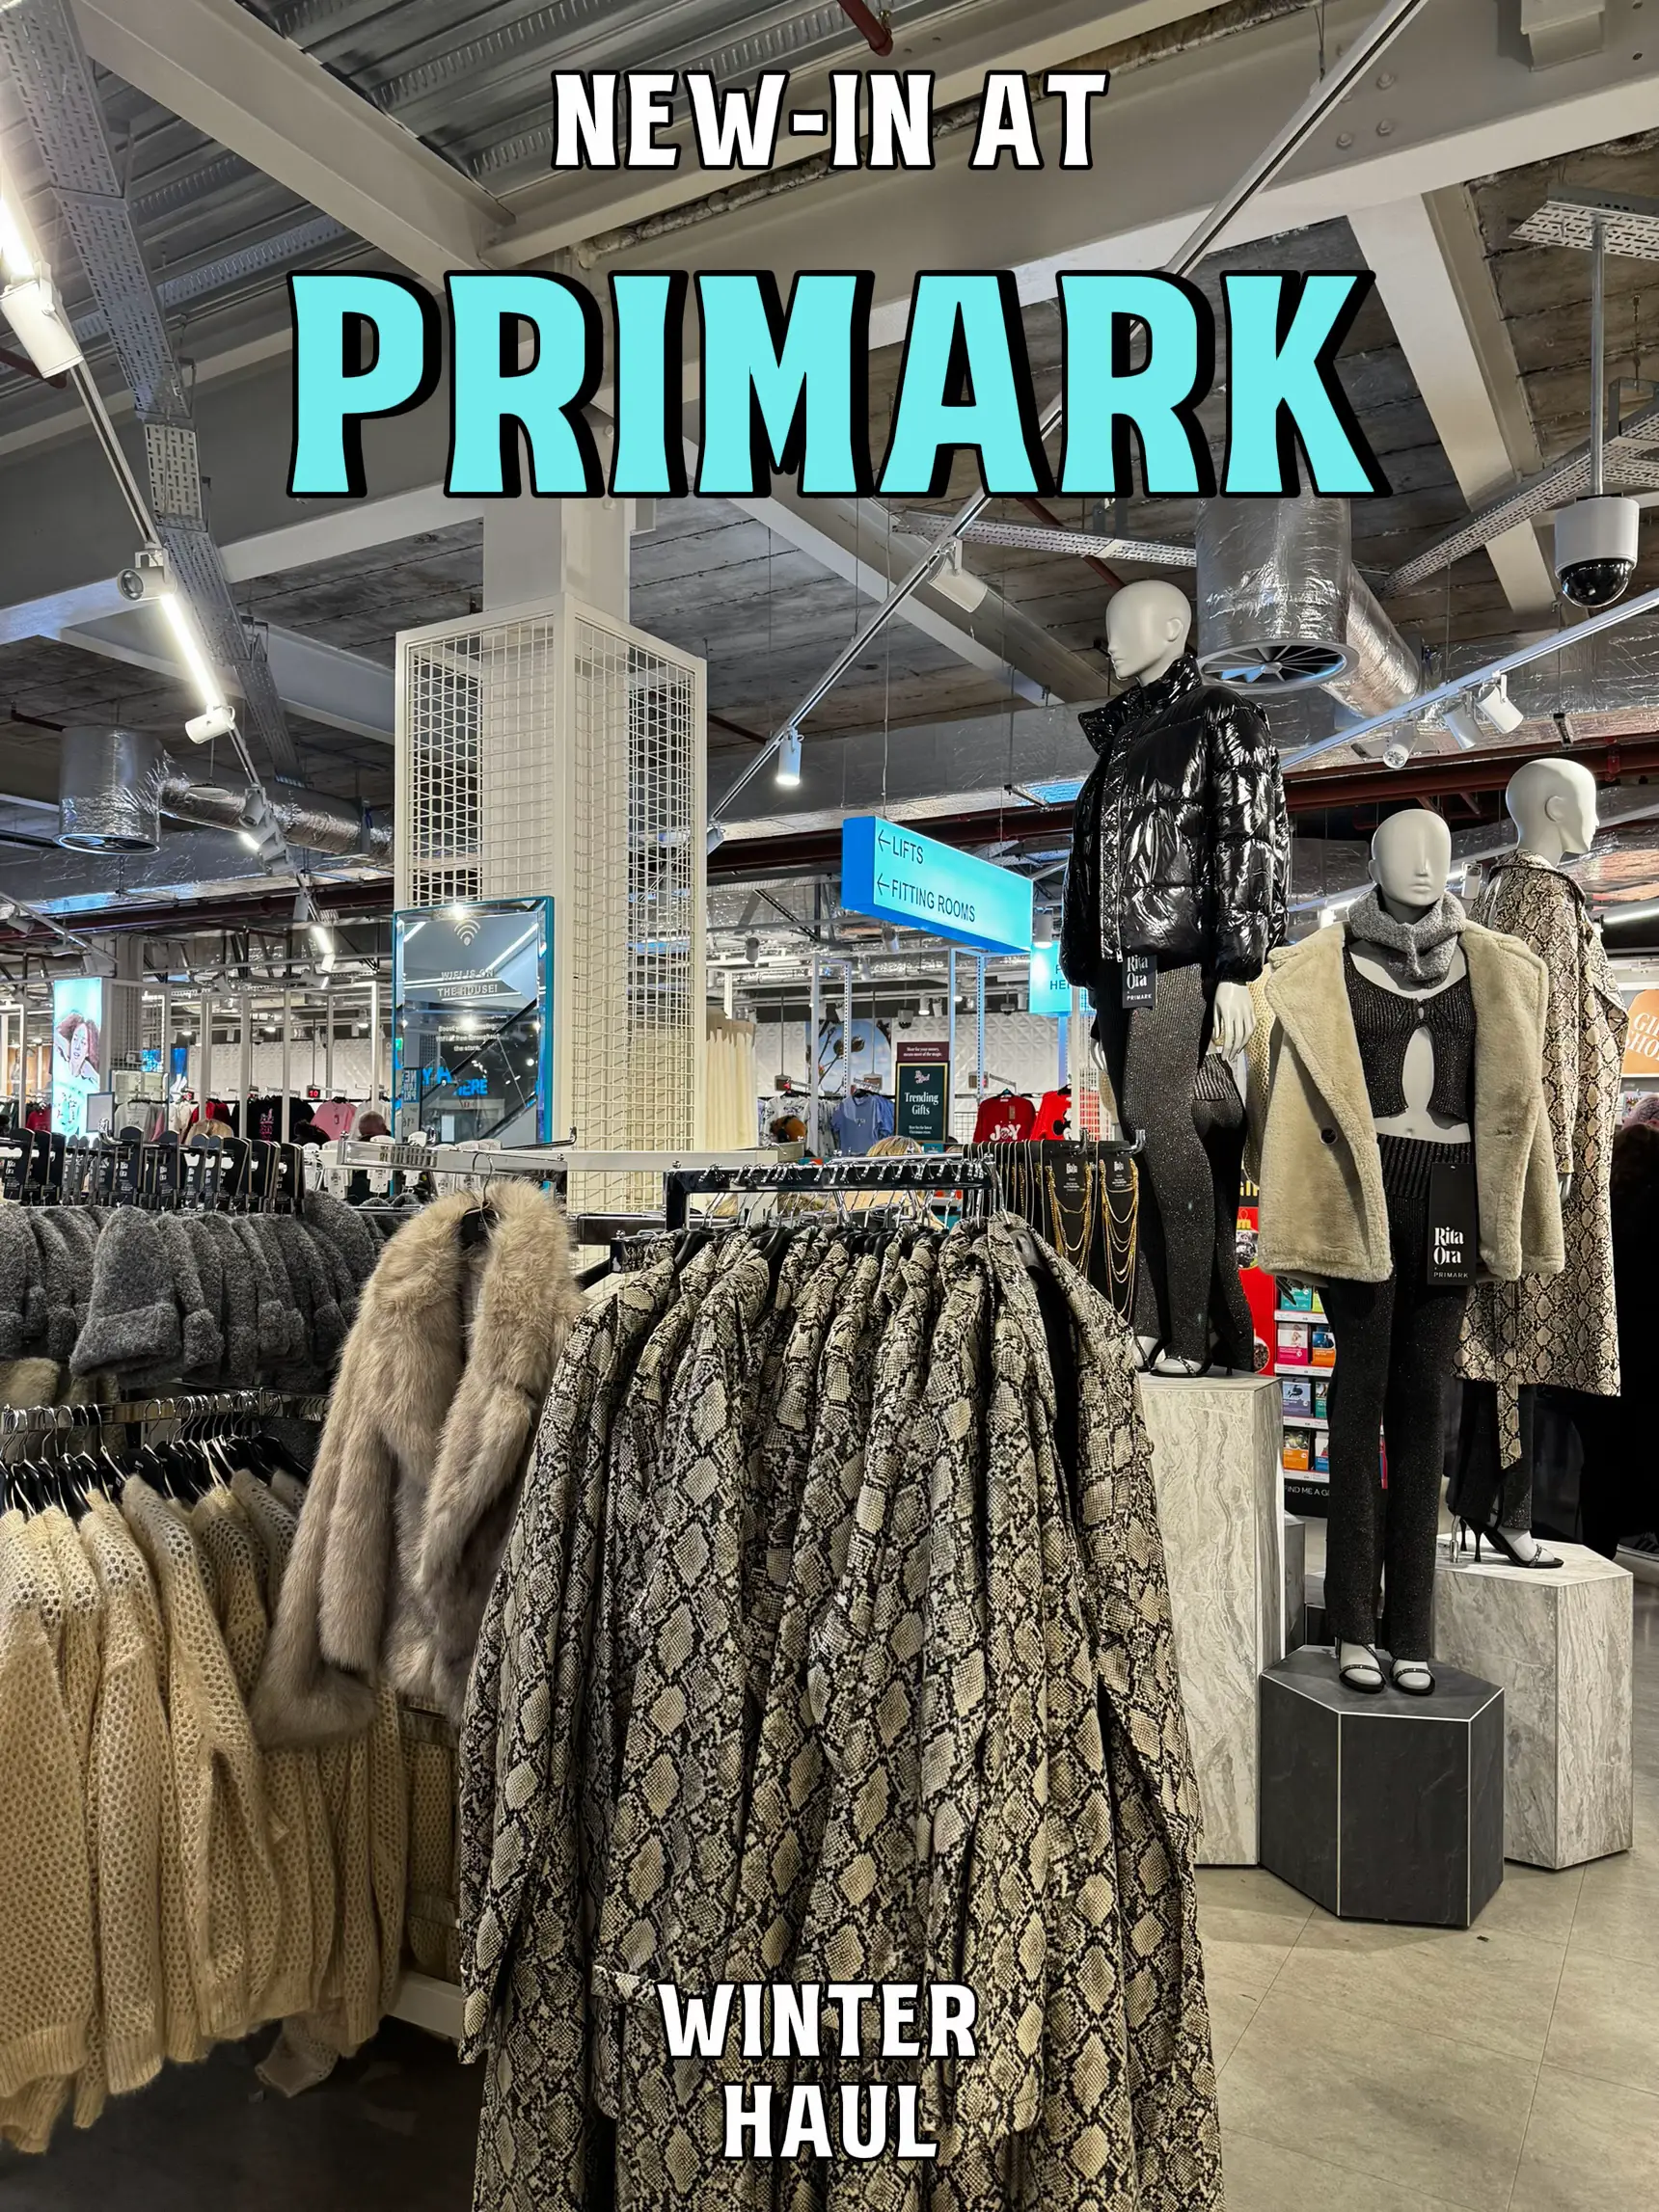 New Primark seamless sets! #primark #primarkfinds #primarknewin #prima